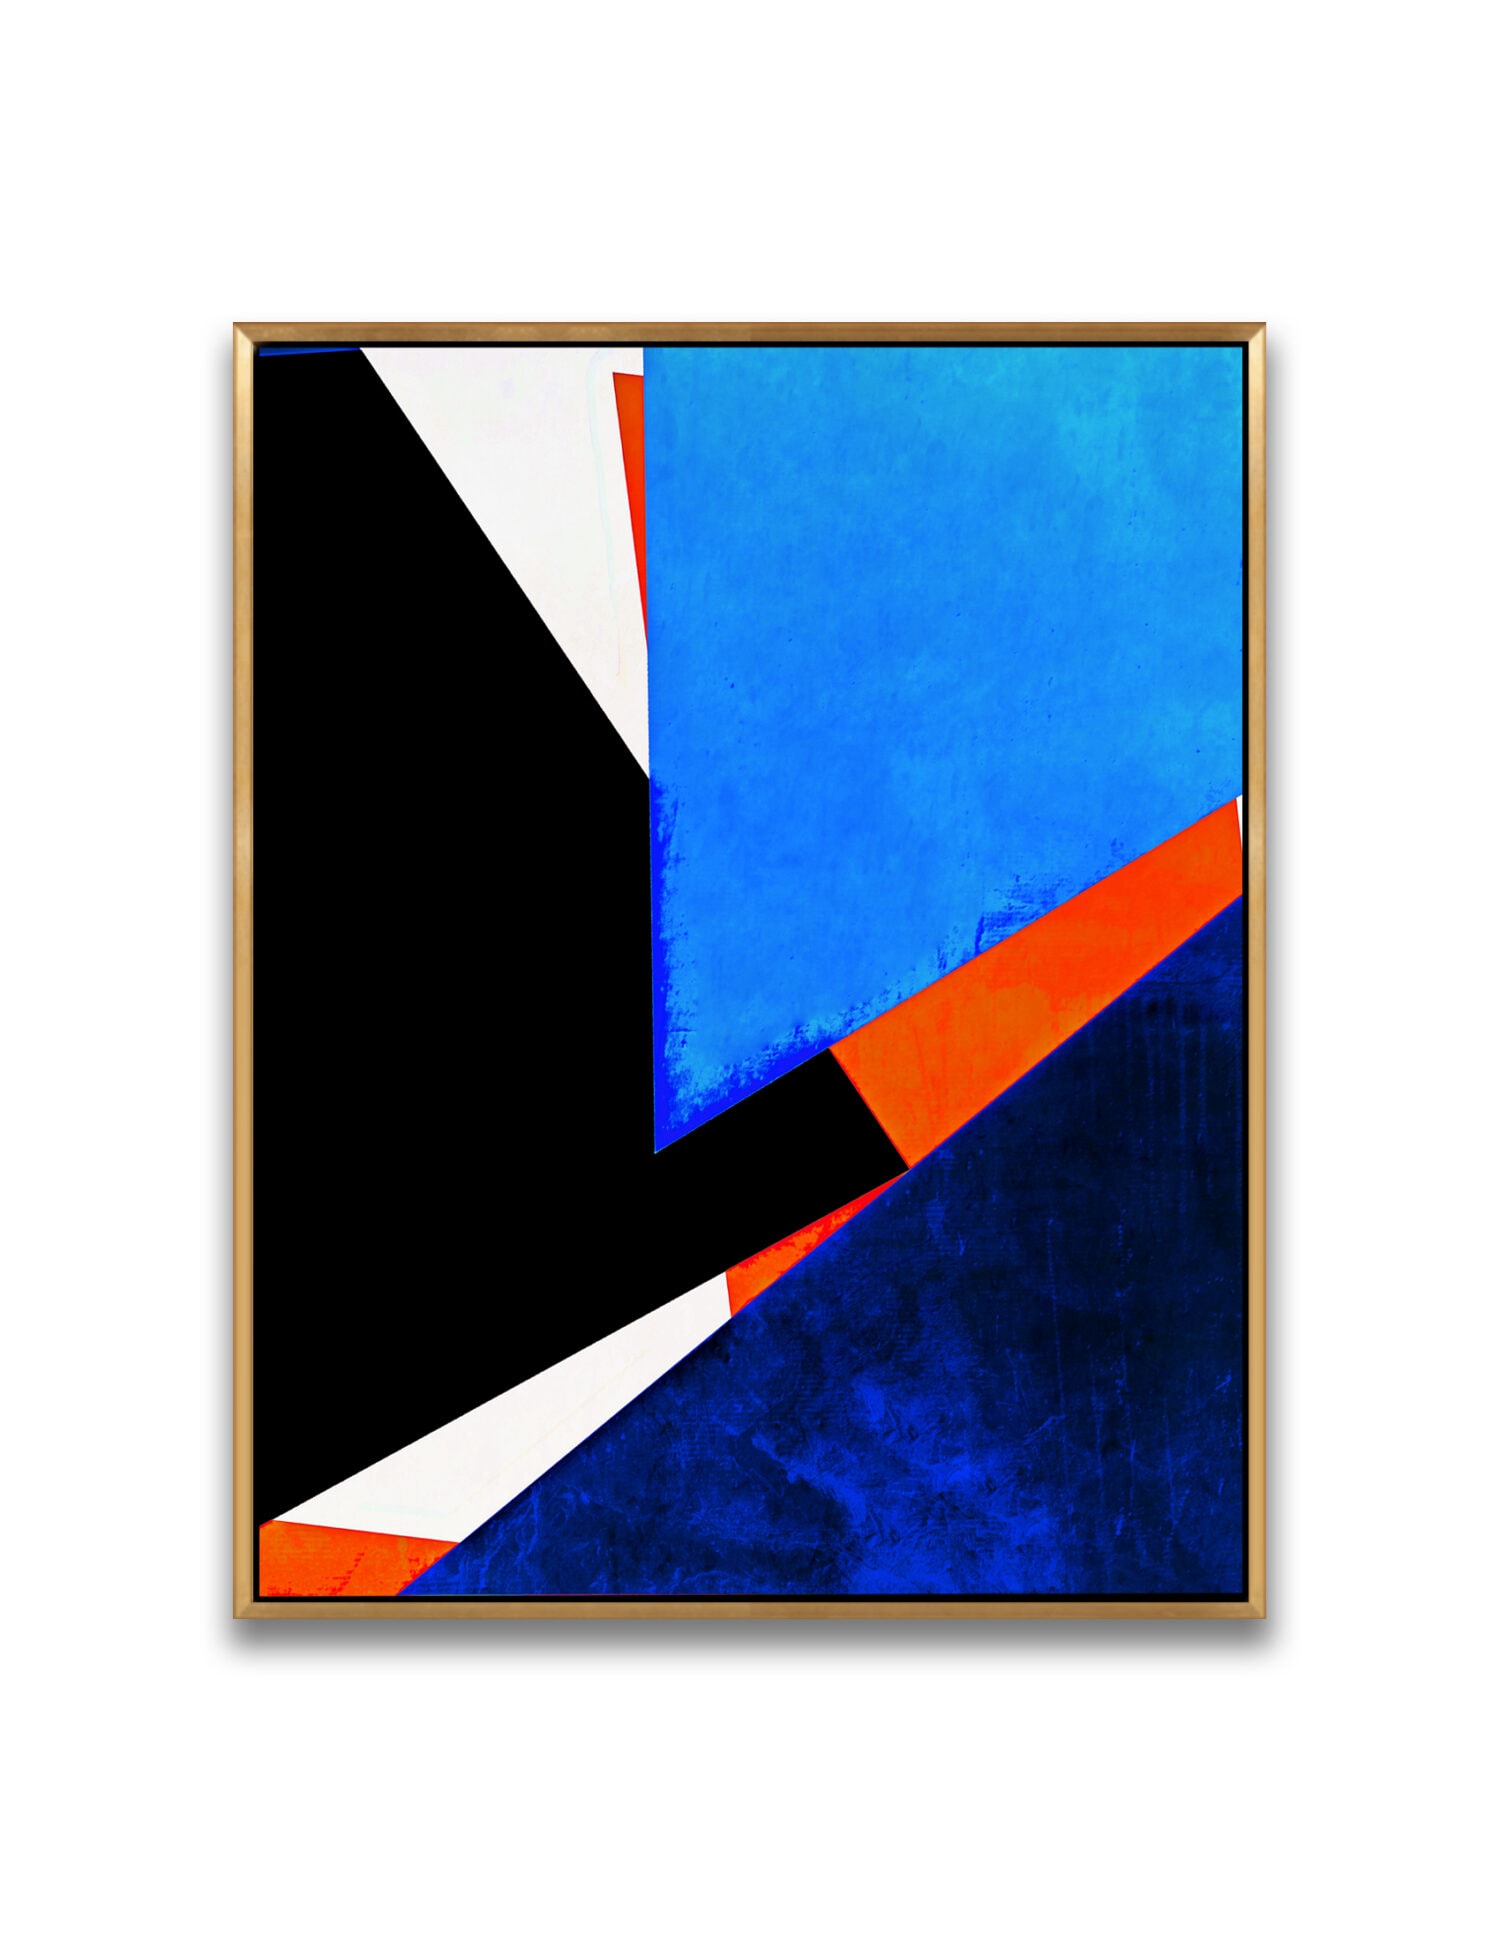 Large minimalist abstract blue geometric art for sale